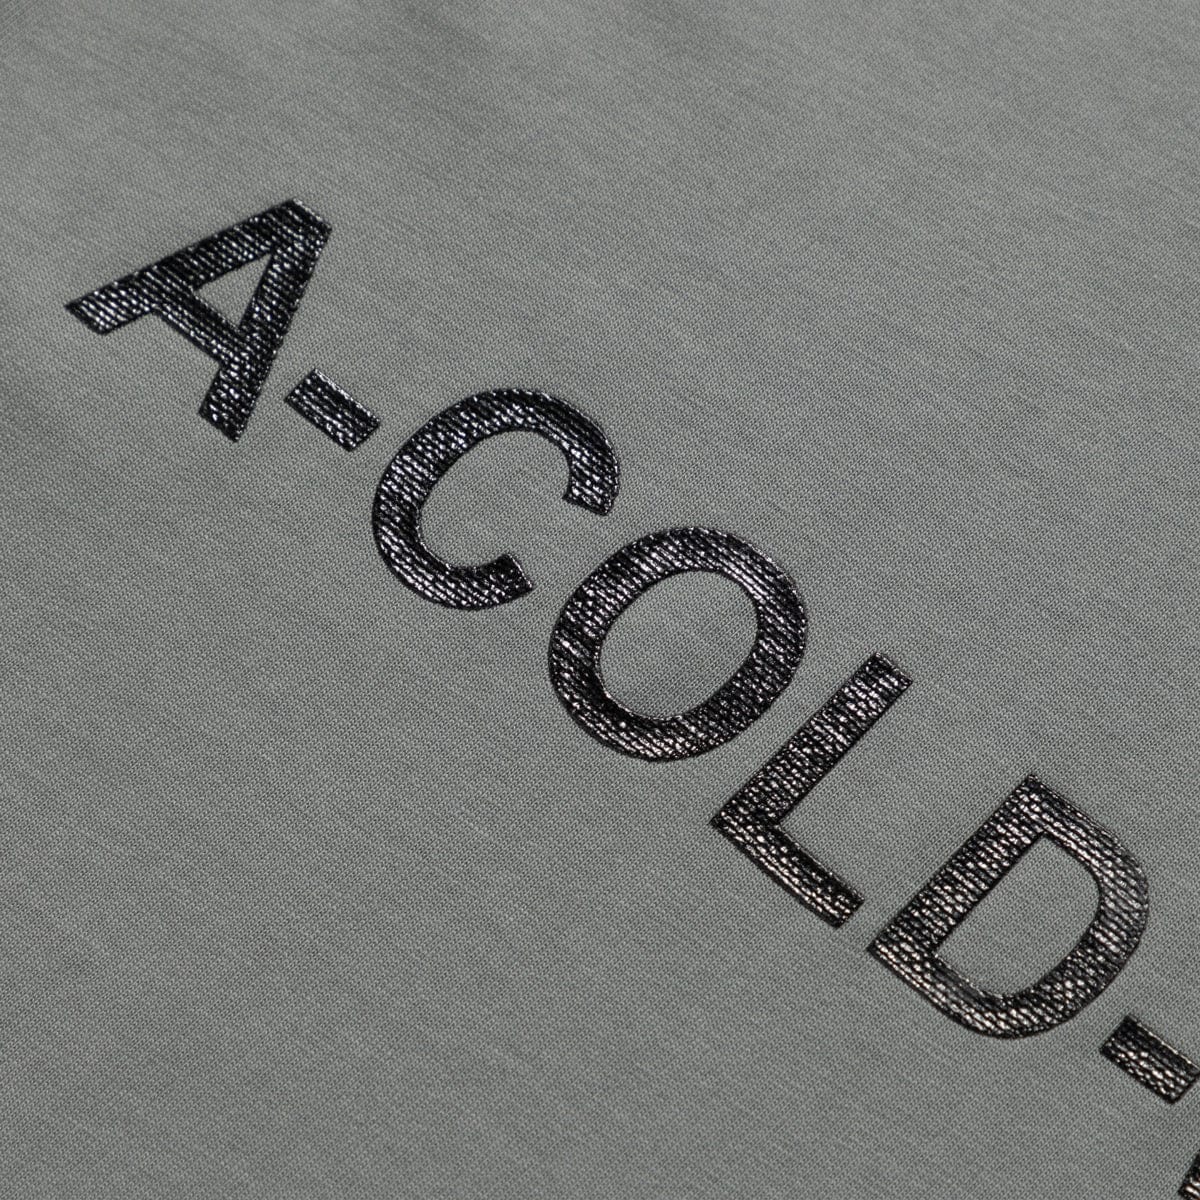 A COLD WALL* T-Shirts LOGO T-SHIRT